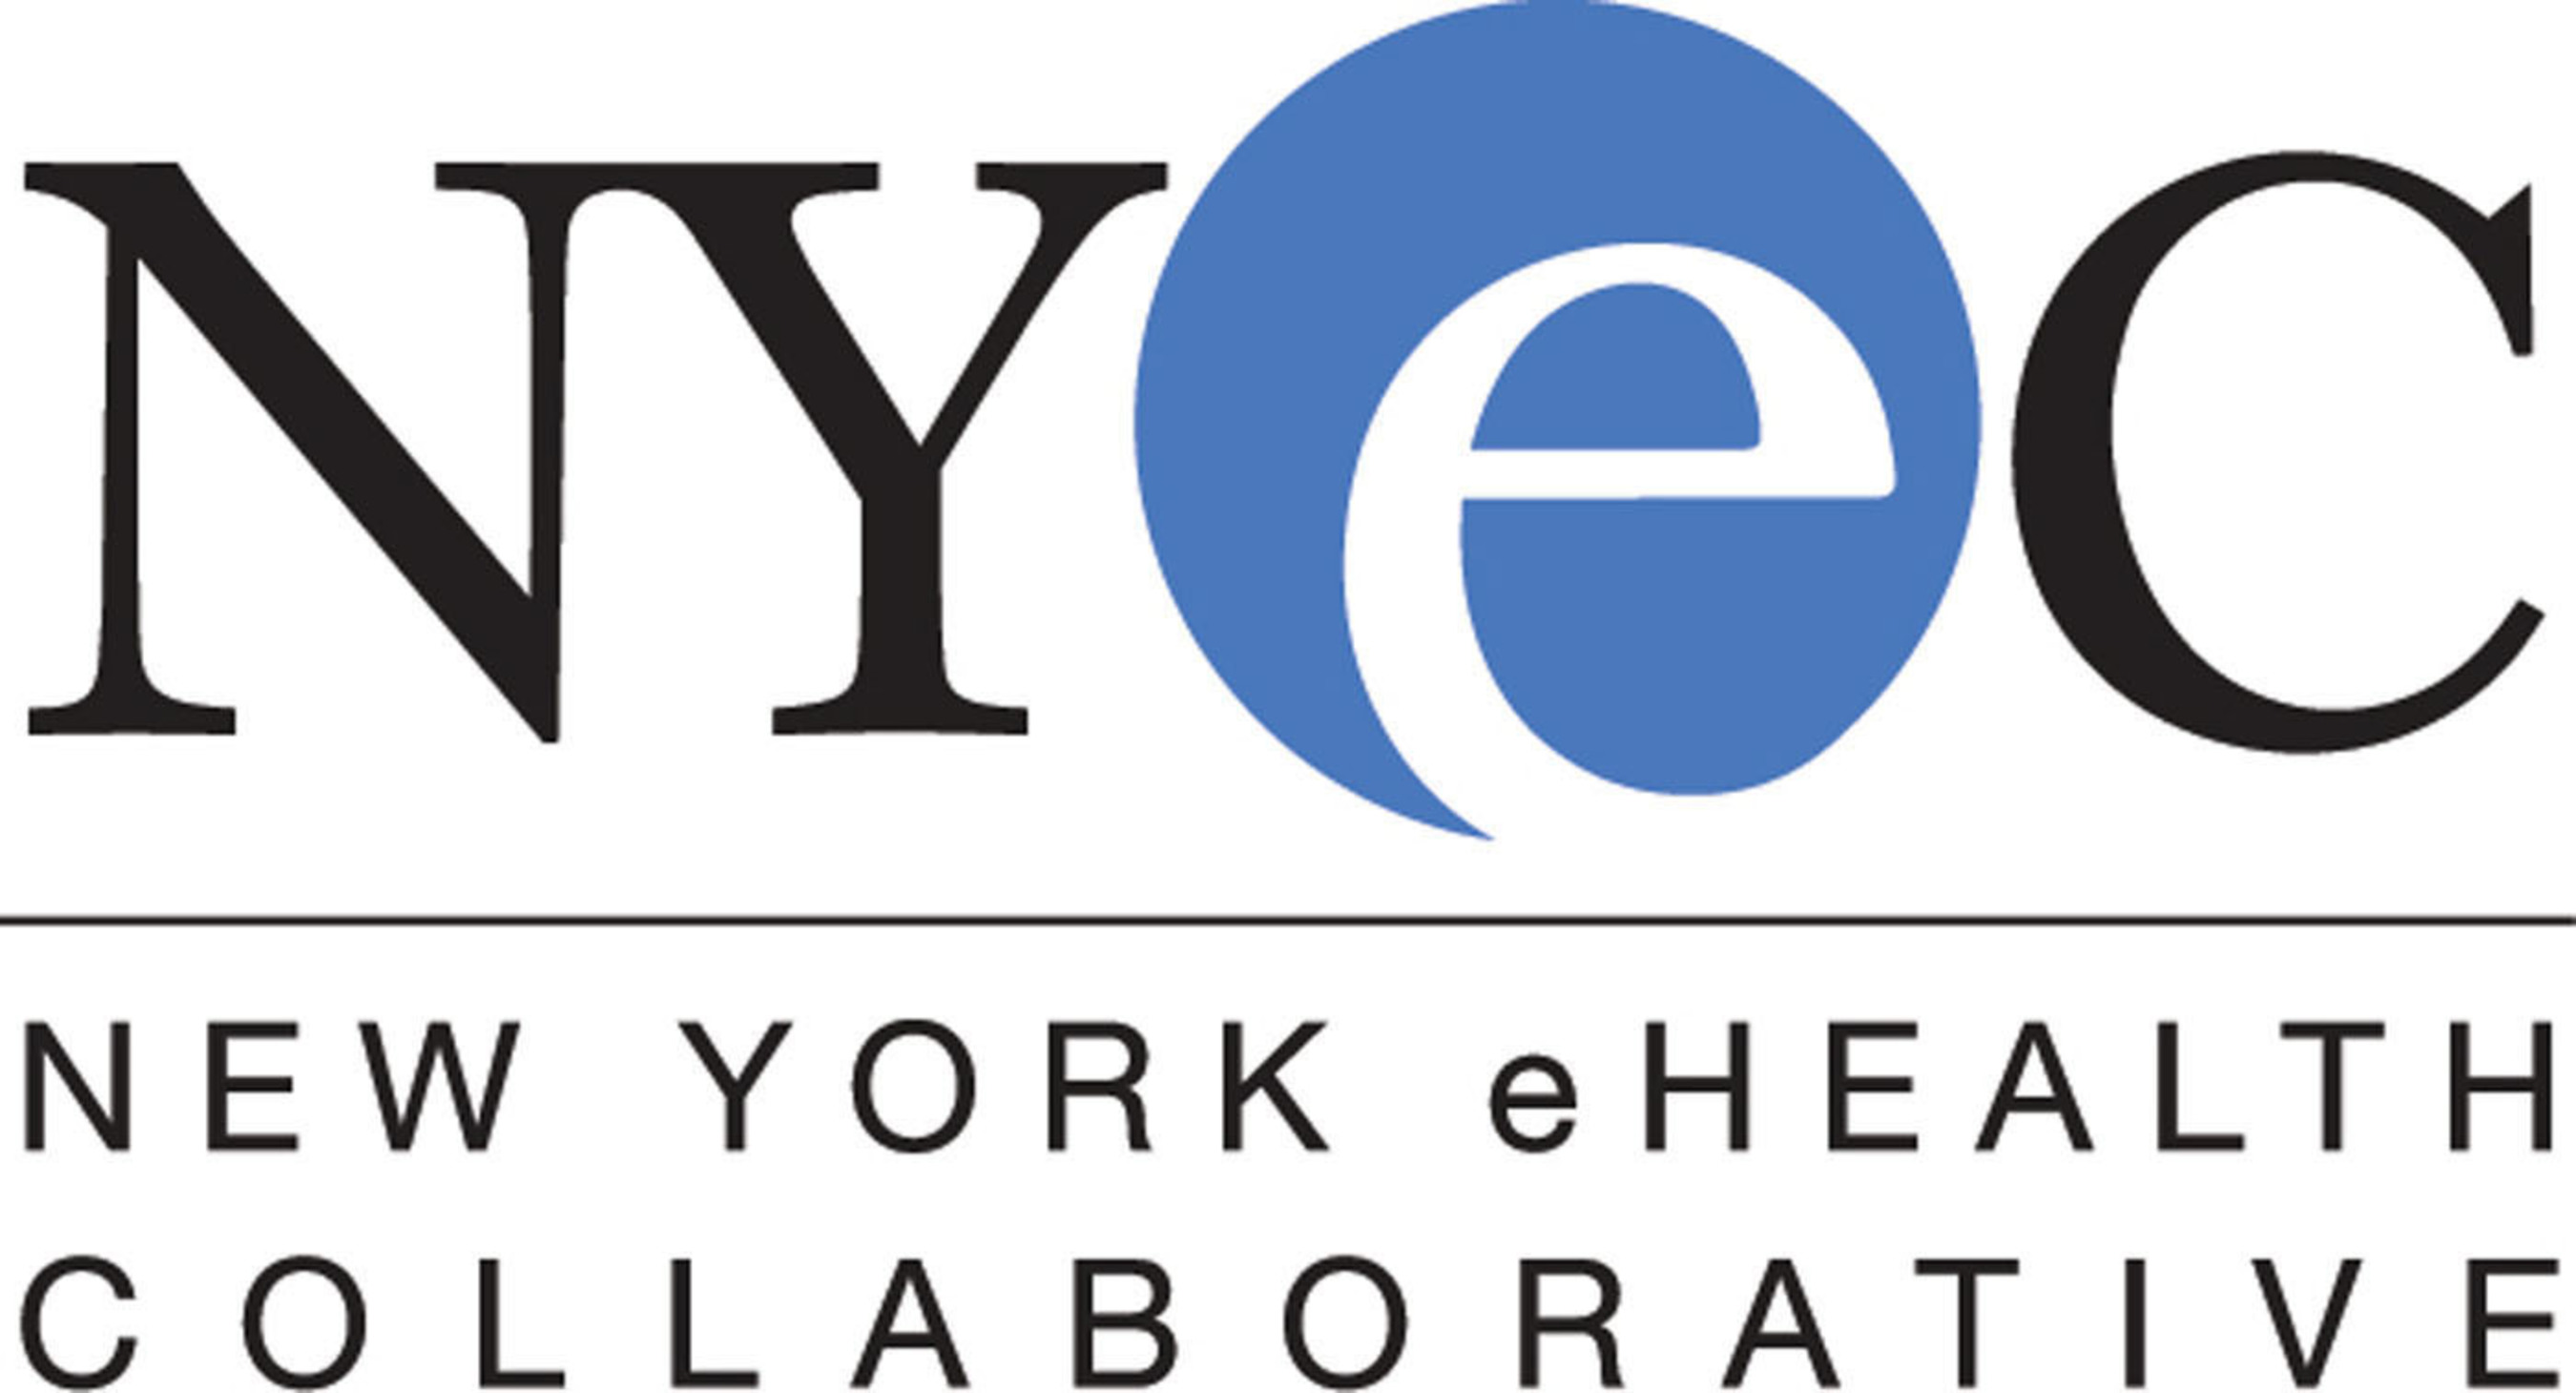 New York eHealth Collaborative Logo. (PRNewsFoto/New York eHealth Collaborative) (PRNewsFoto/)